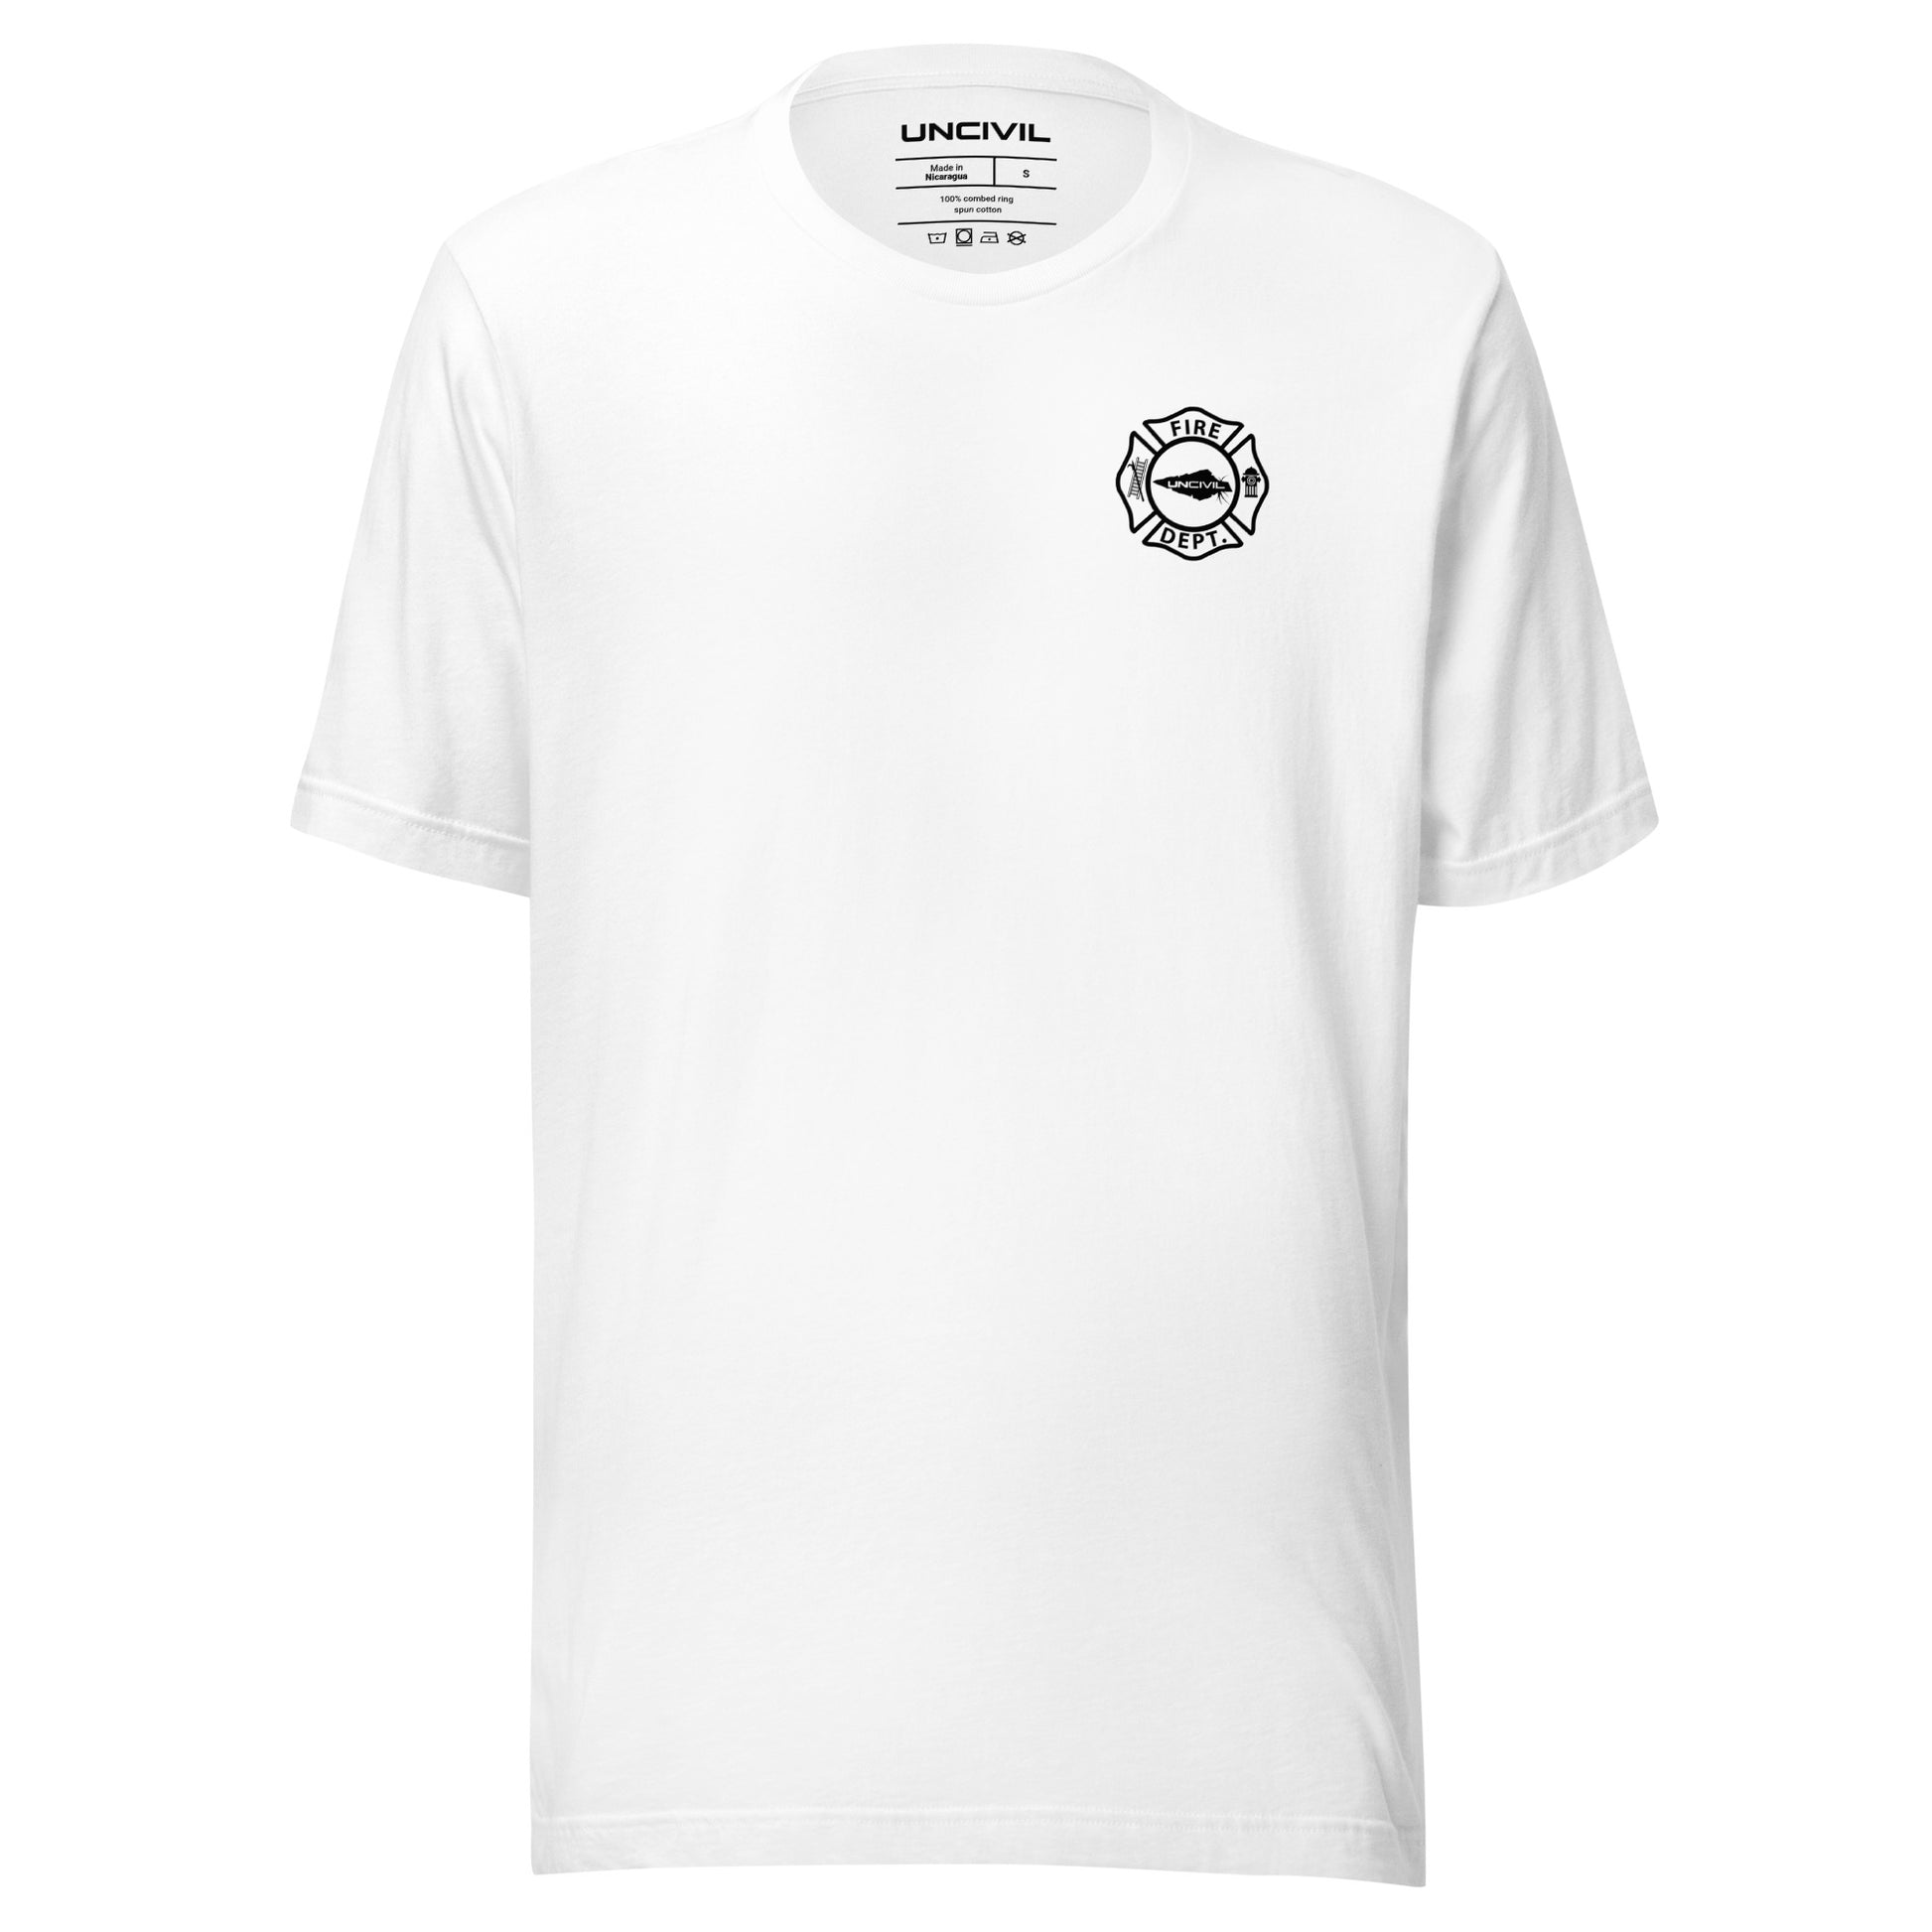 Keys to the City Halligan shirt, White unisex t-shirt with maltese cross